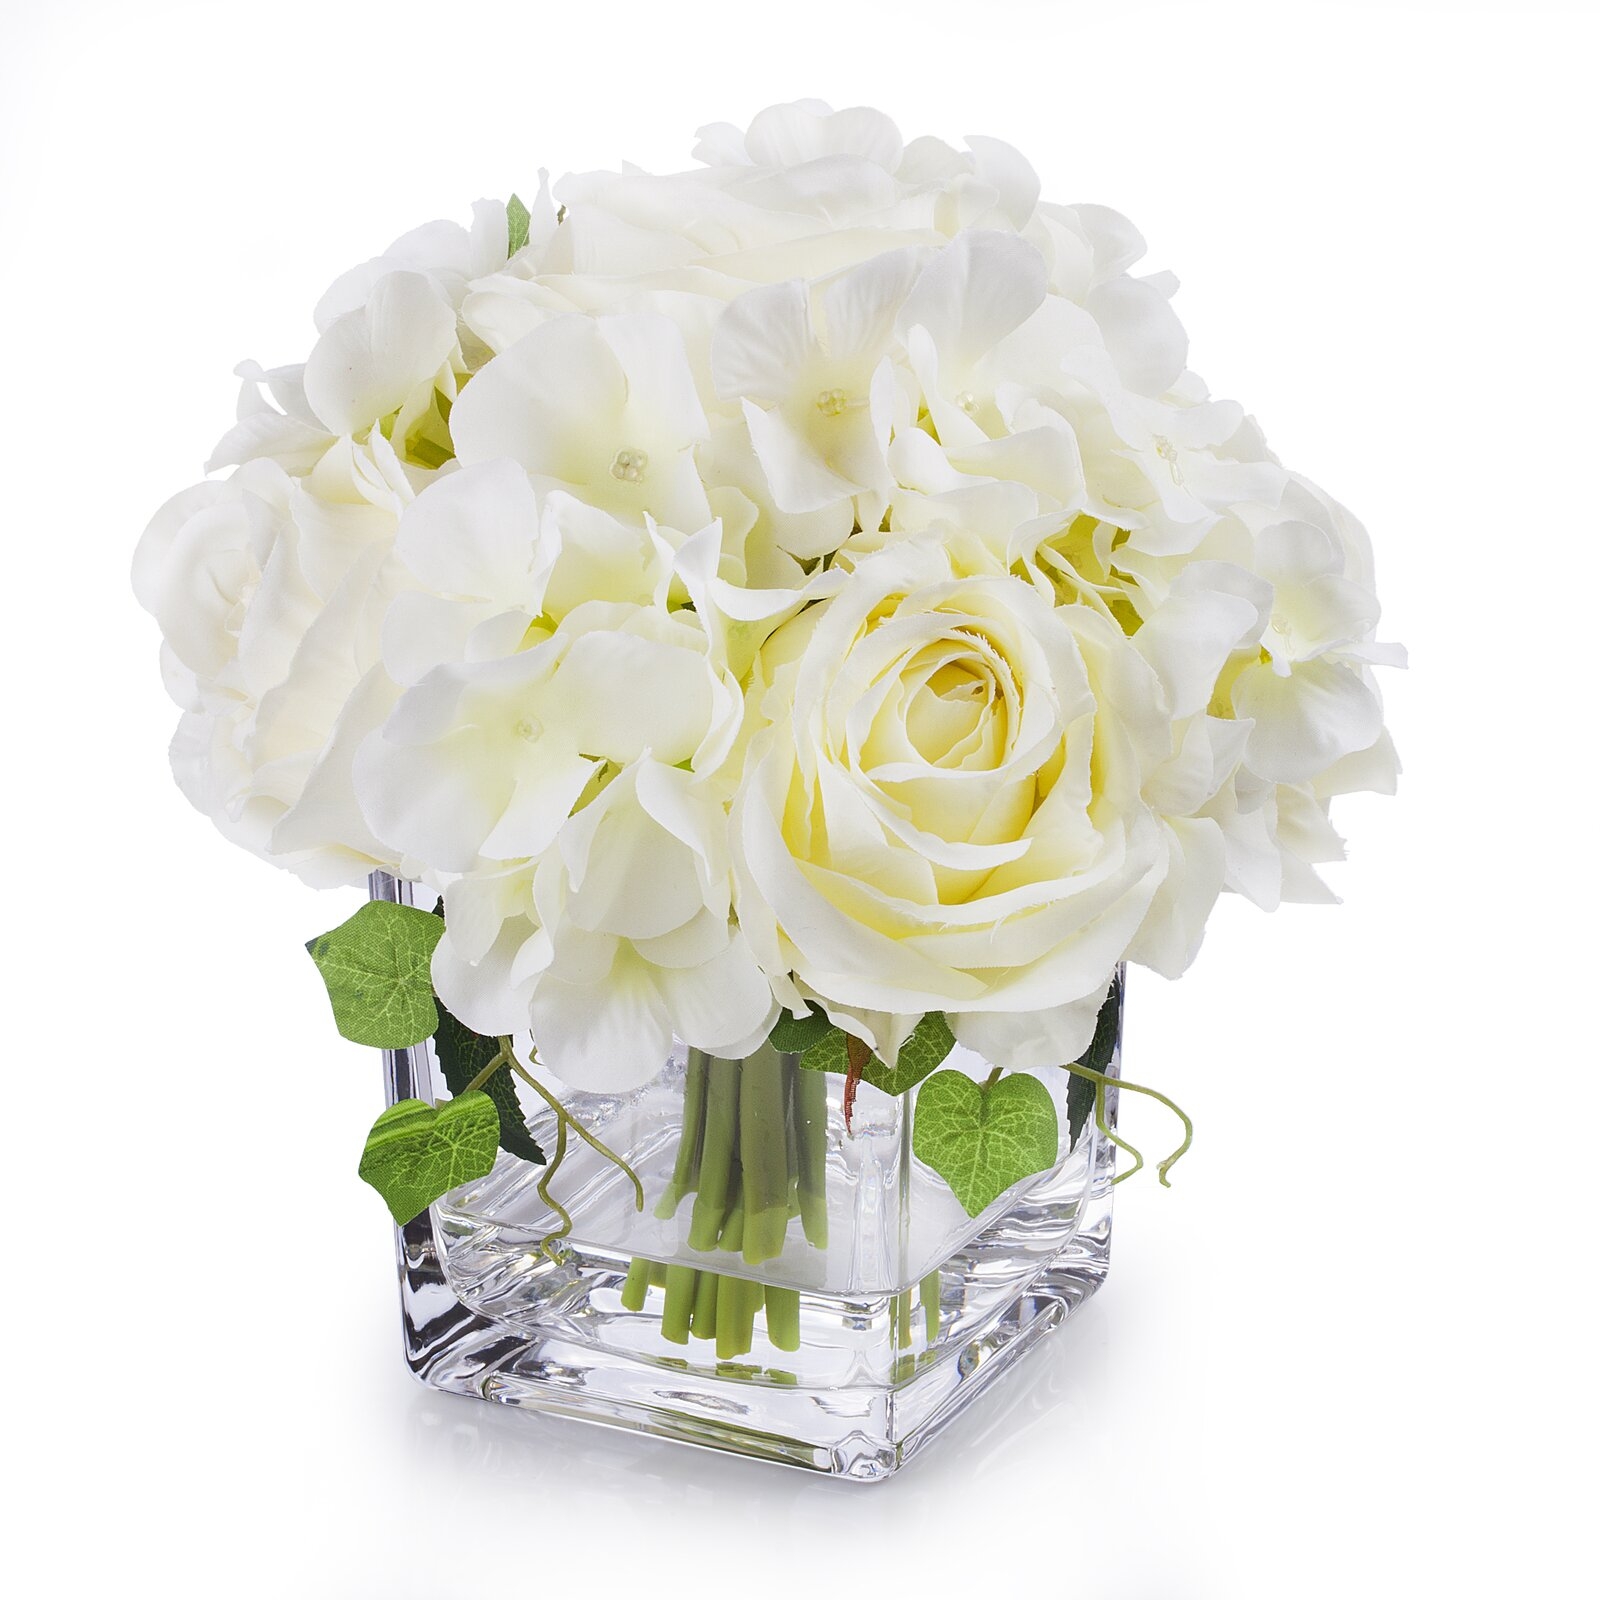 Hydrangea Flower Arrangement in Glass Vase - Image 1